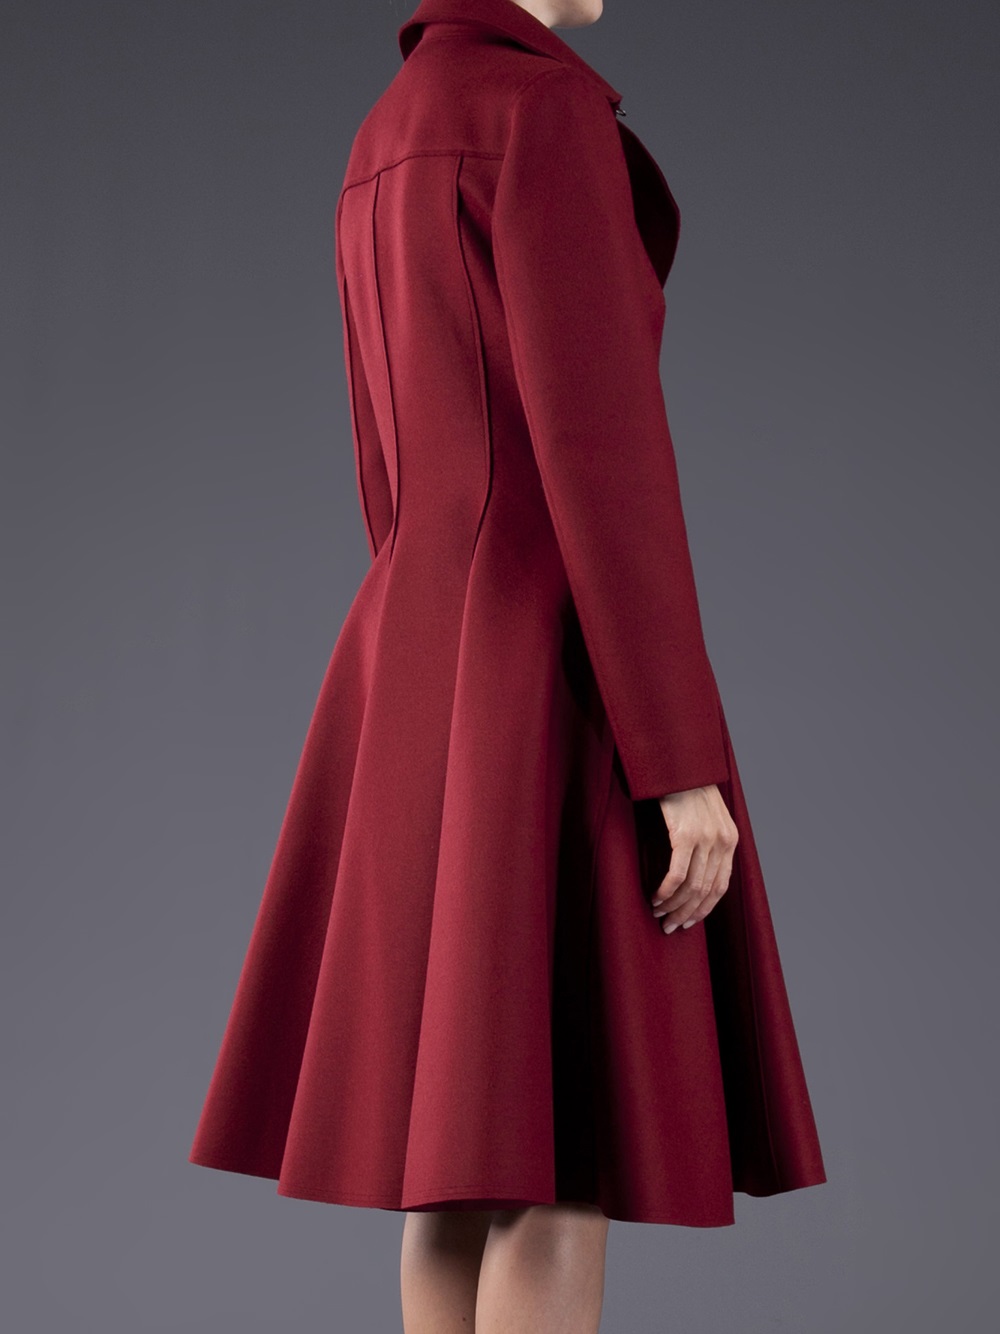 Lyst - Lanvin Flare Skirt Coat in Red